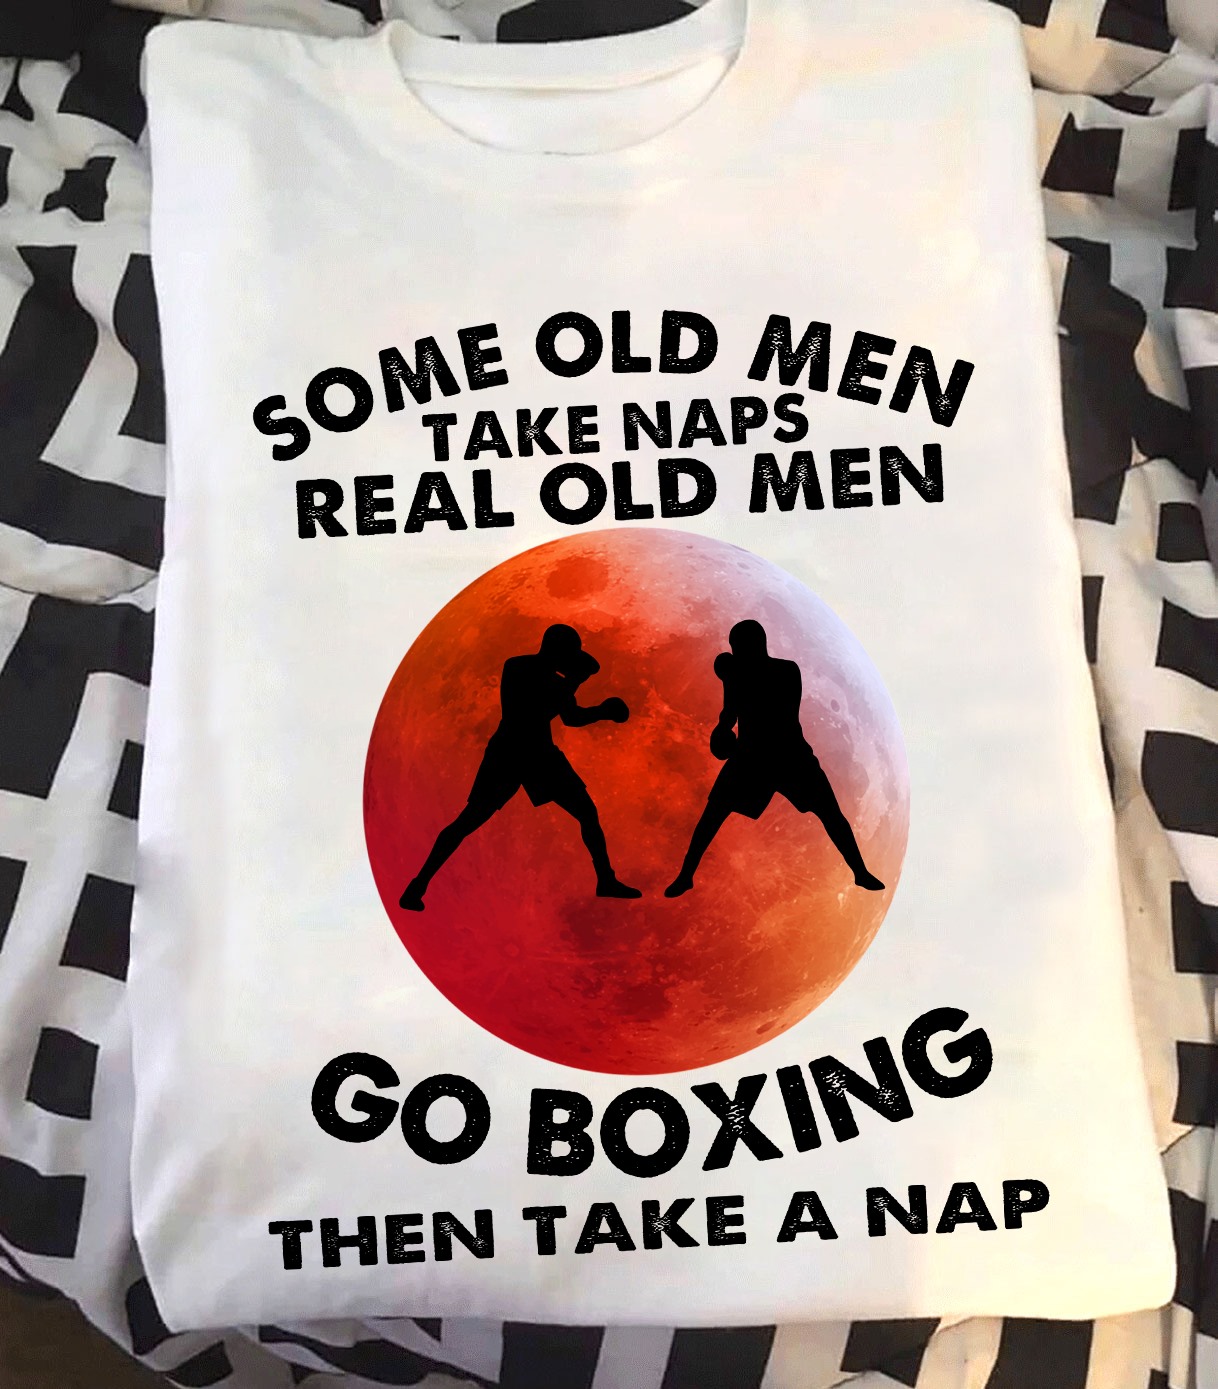 Some old men take naps real old men go boxing